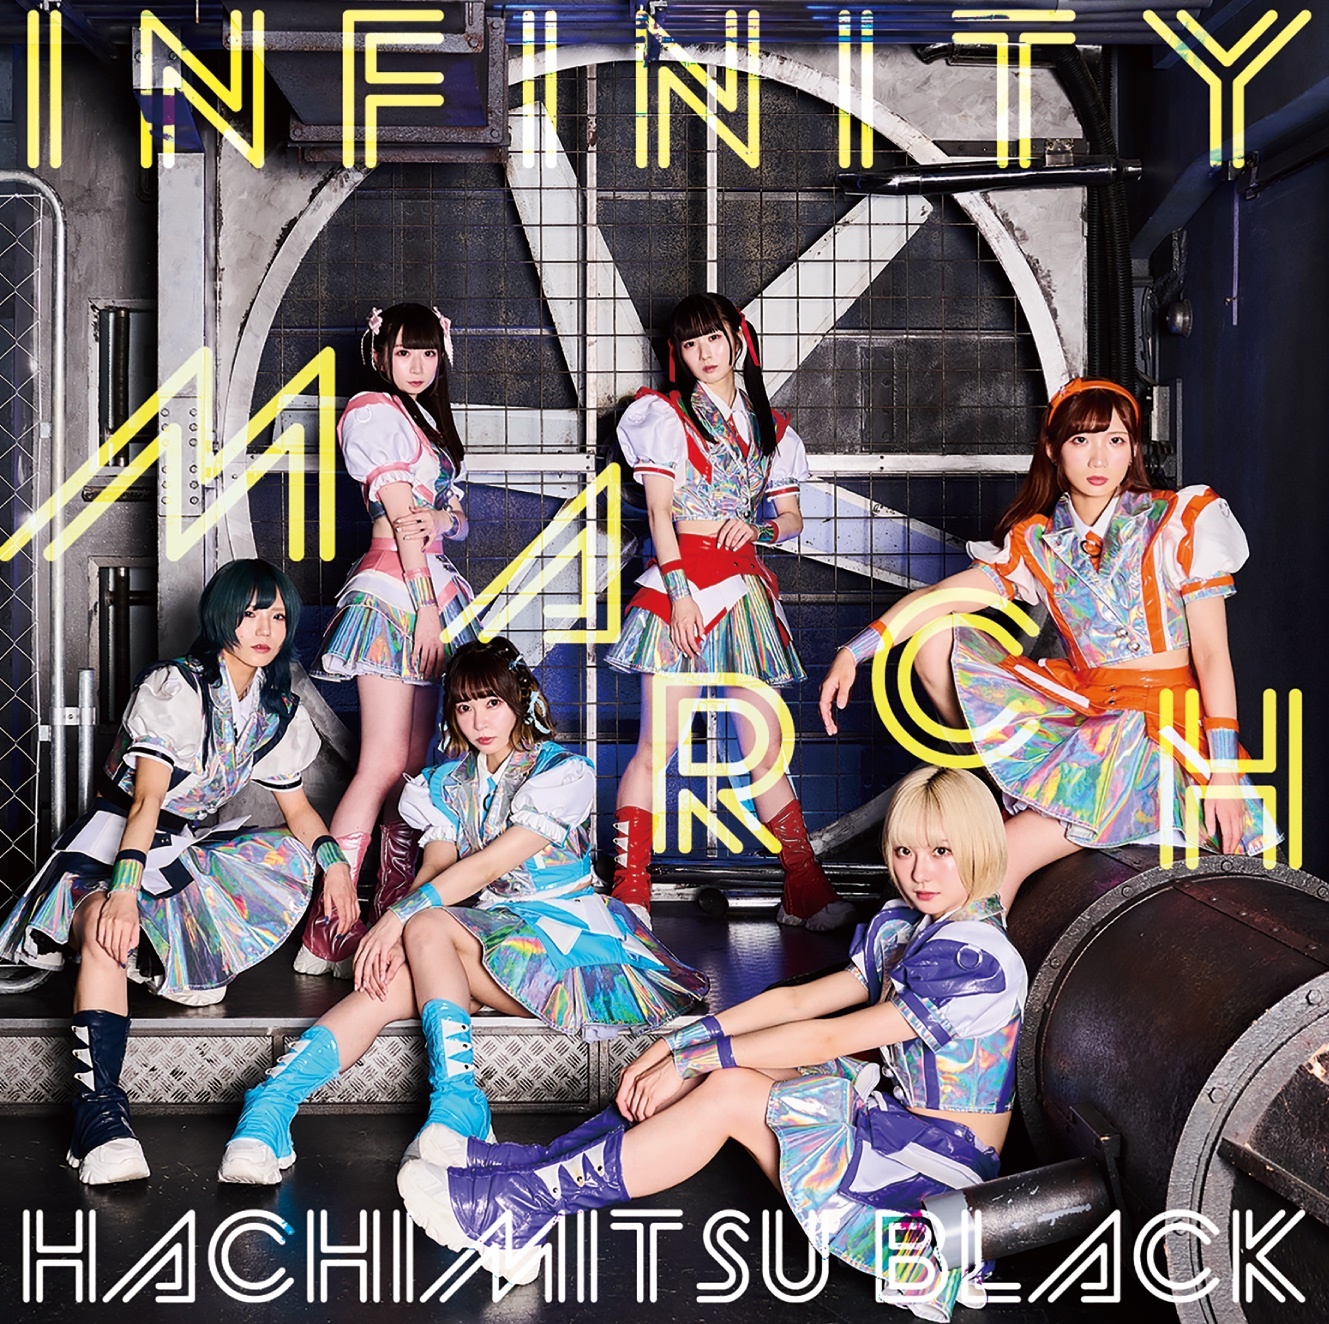 Hachimitsu Black : Infinity March [Type B]